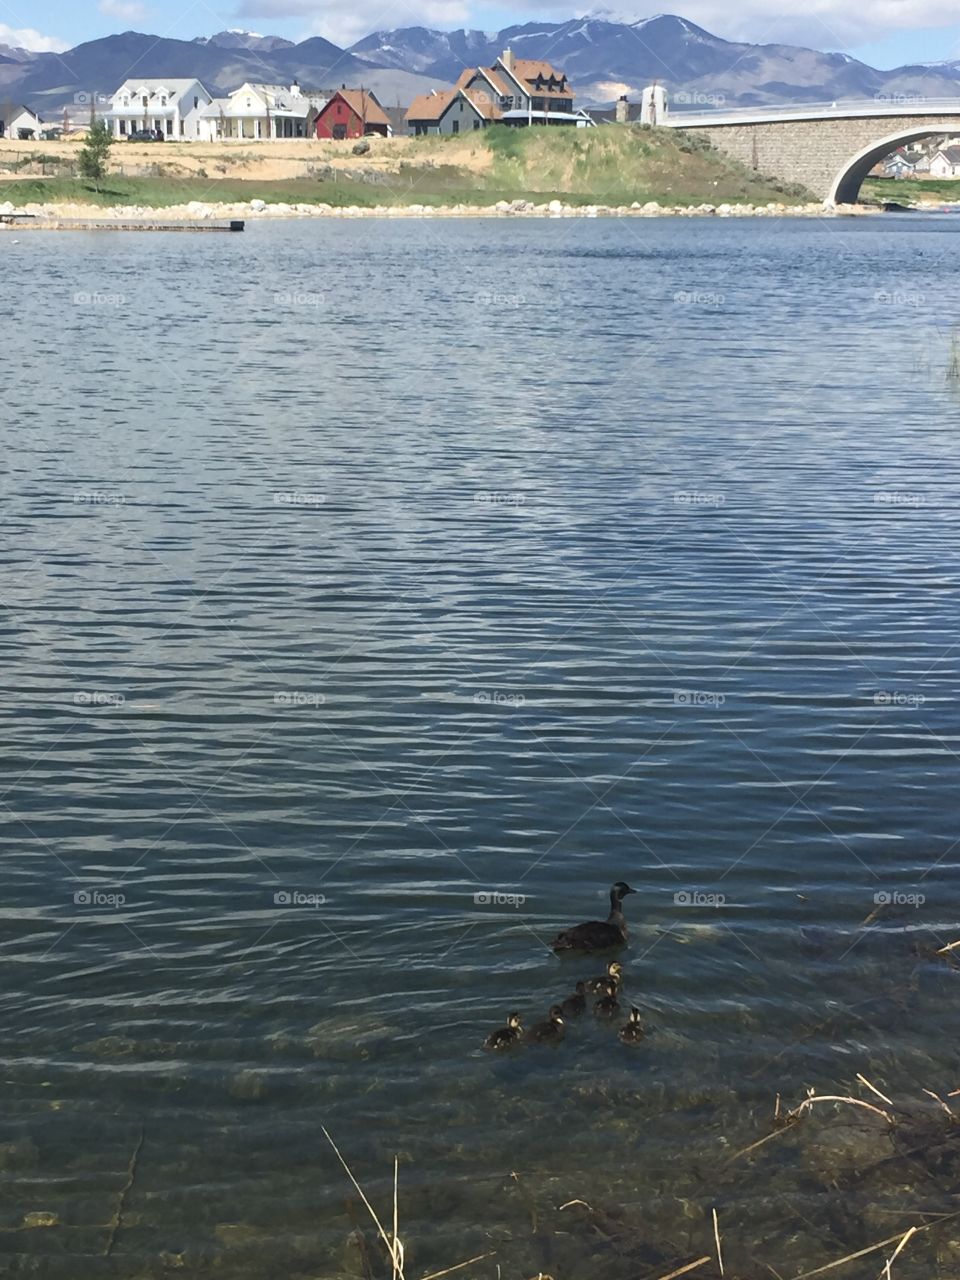 Baby Ducks and Mommy Ducks in Oquirrh Lake, in South Jordan-Daybreak, Utah. Copyright © CM Photography May 2019. 